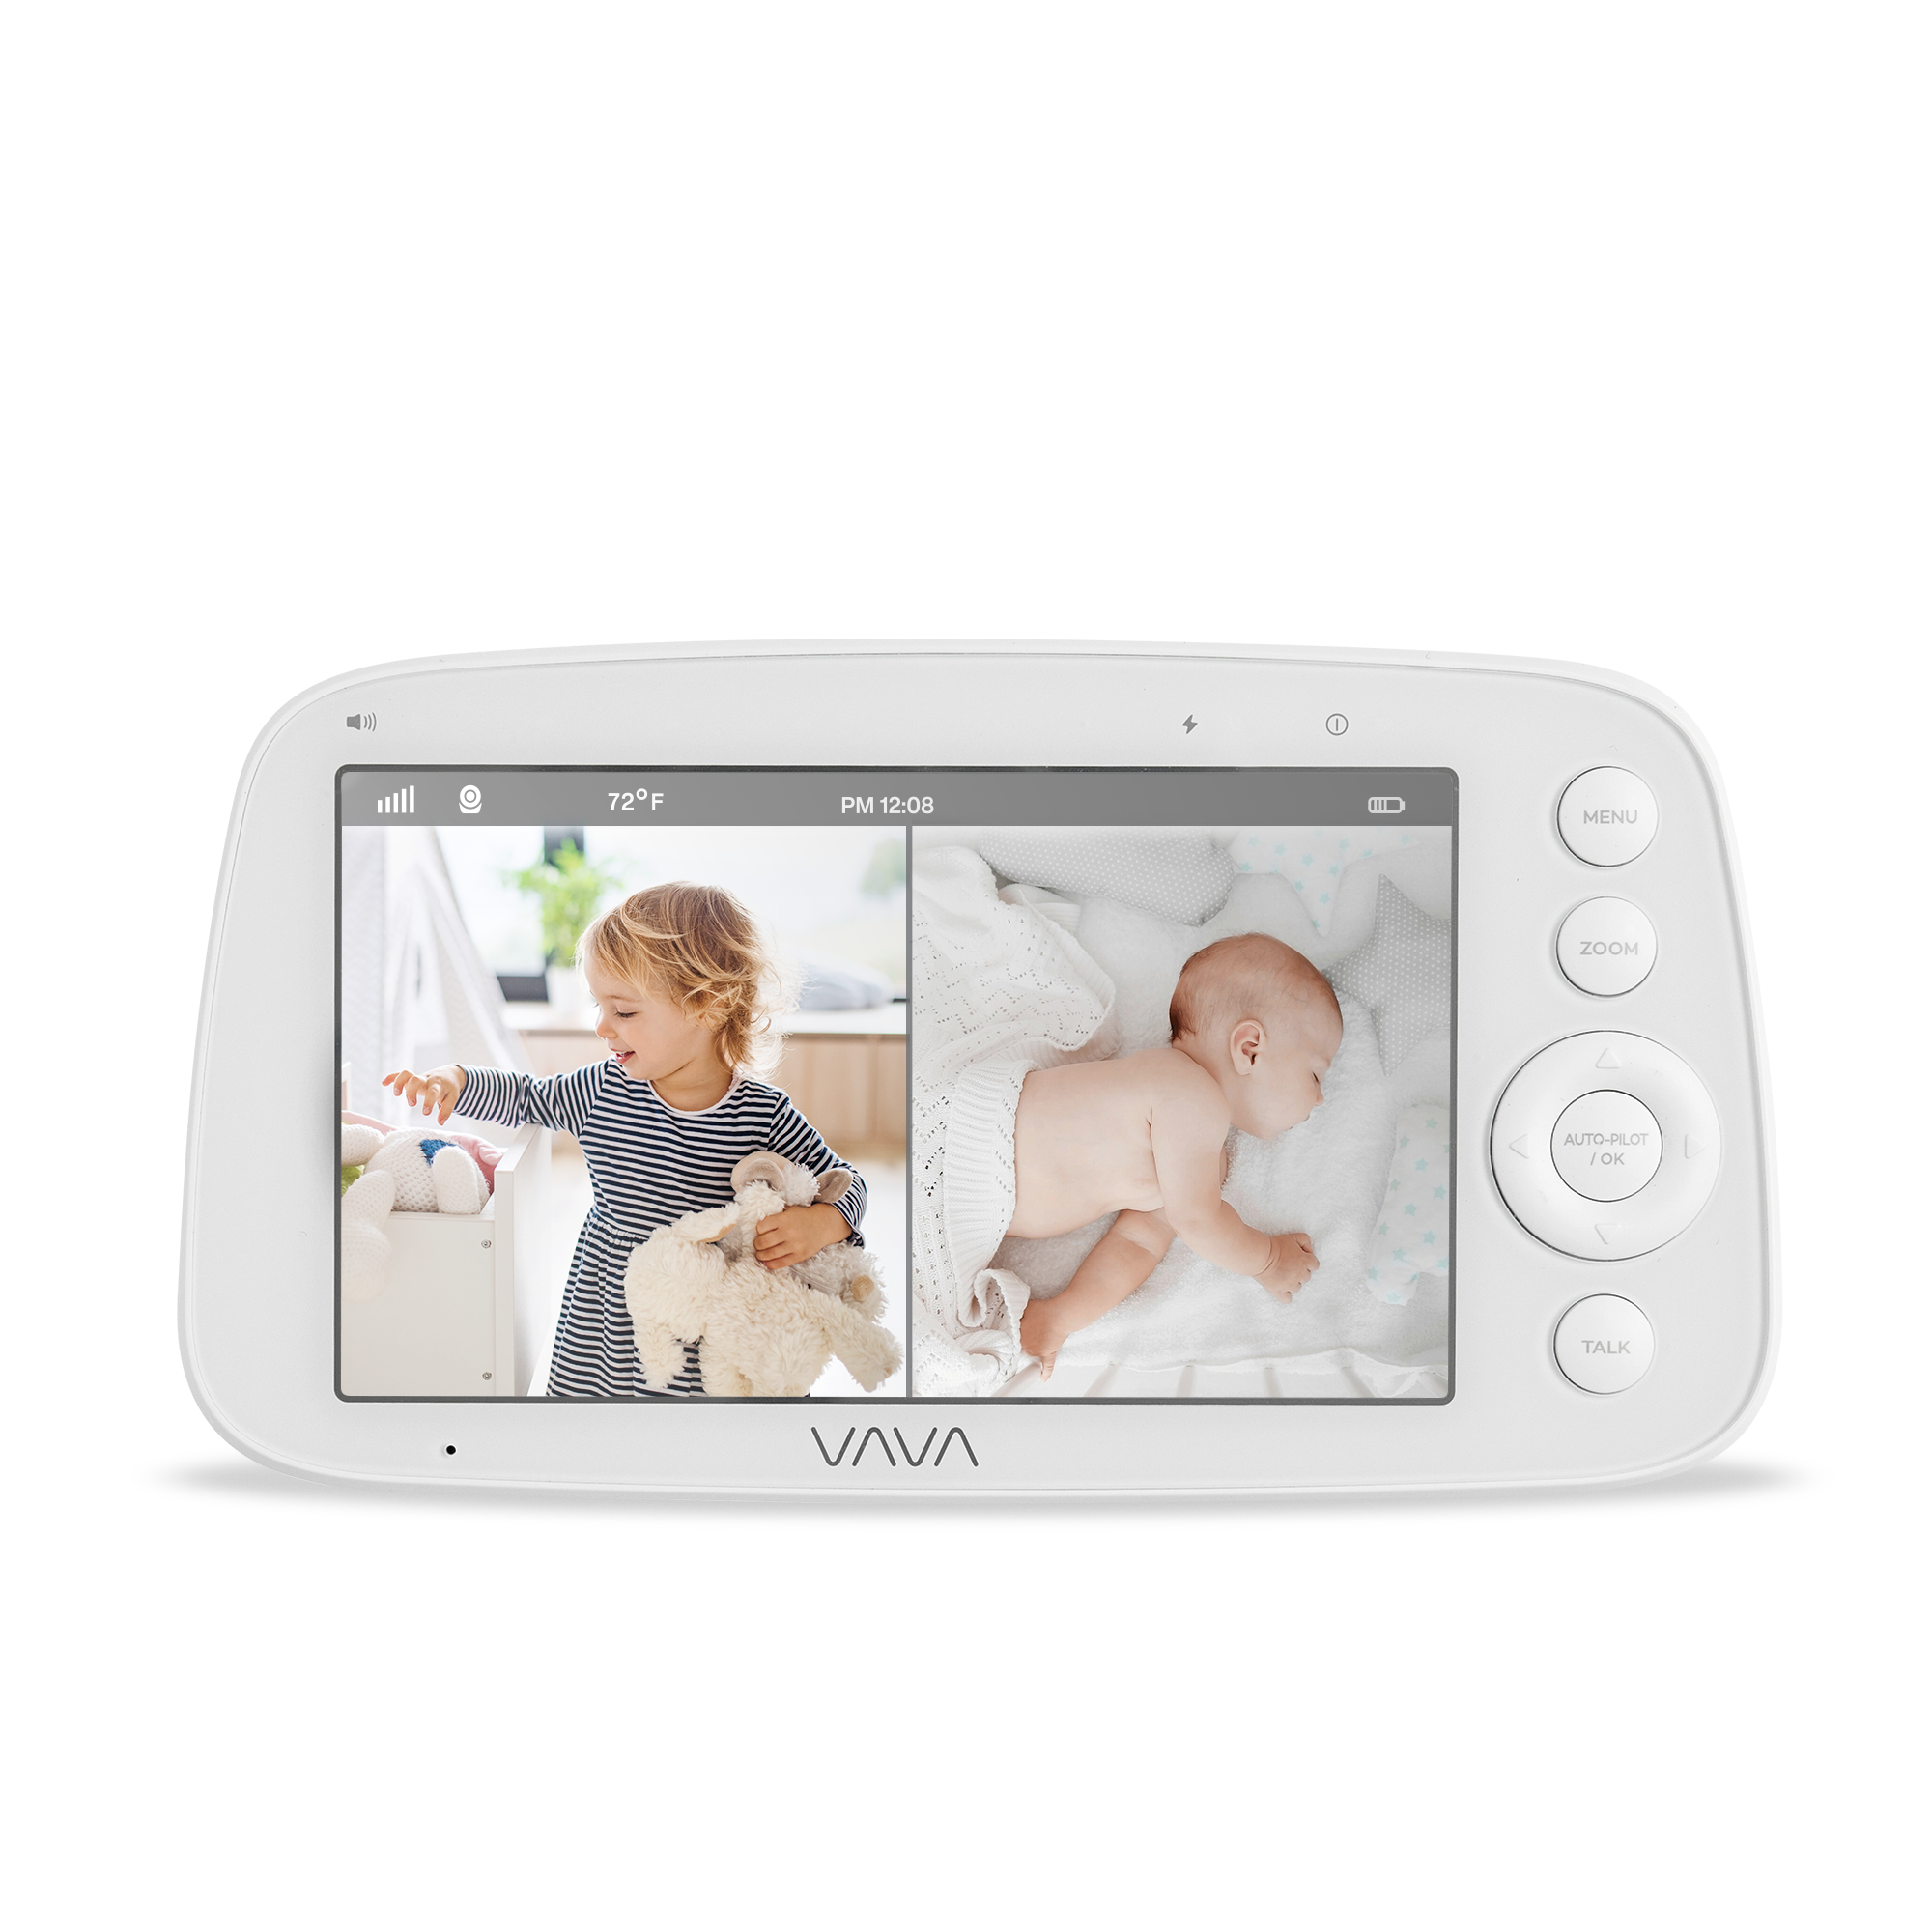 VAVA Baby Monitor Parent Unit in split screen mode